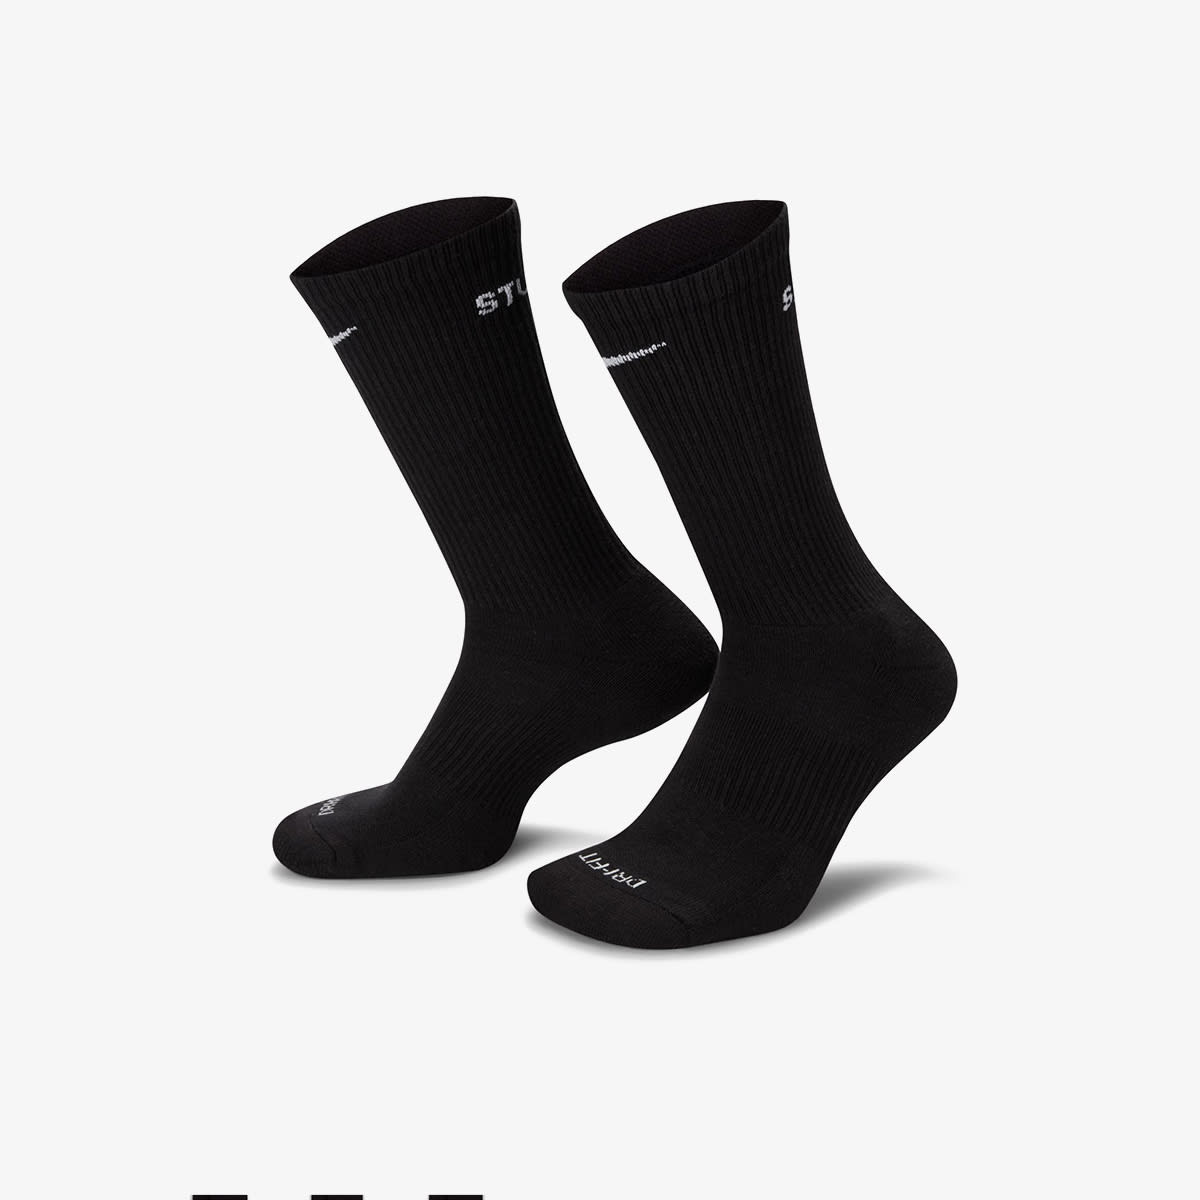 Nike x Stussy Socks (Black & White) | END. Launches